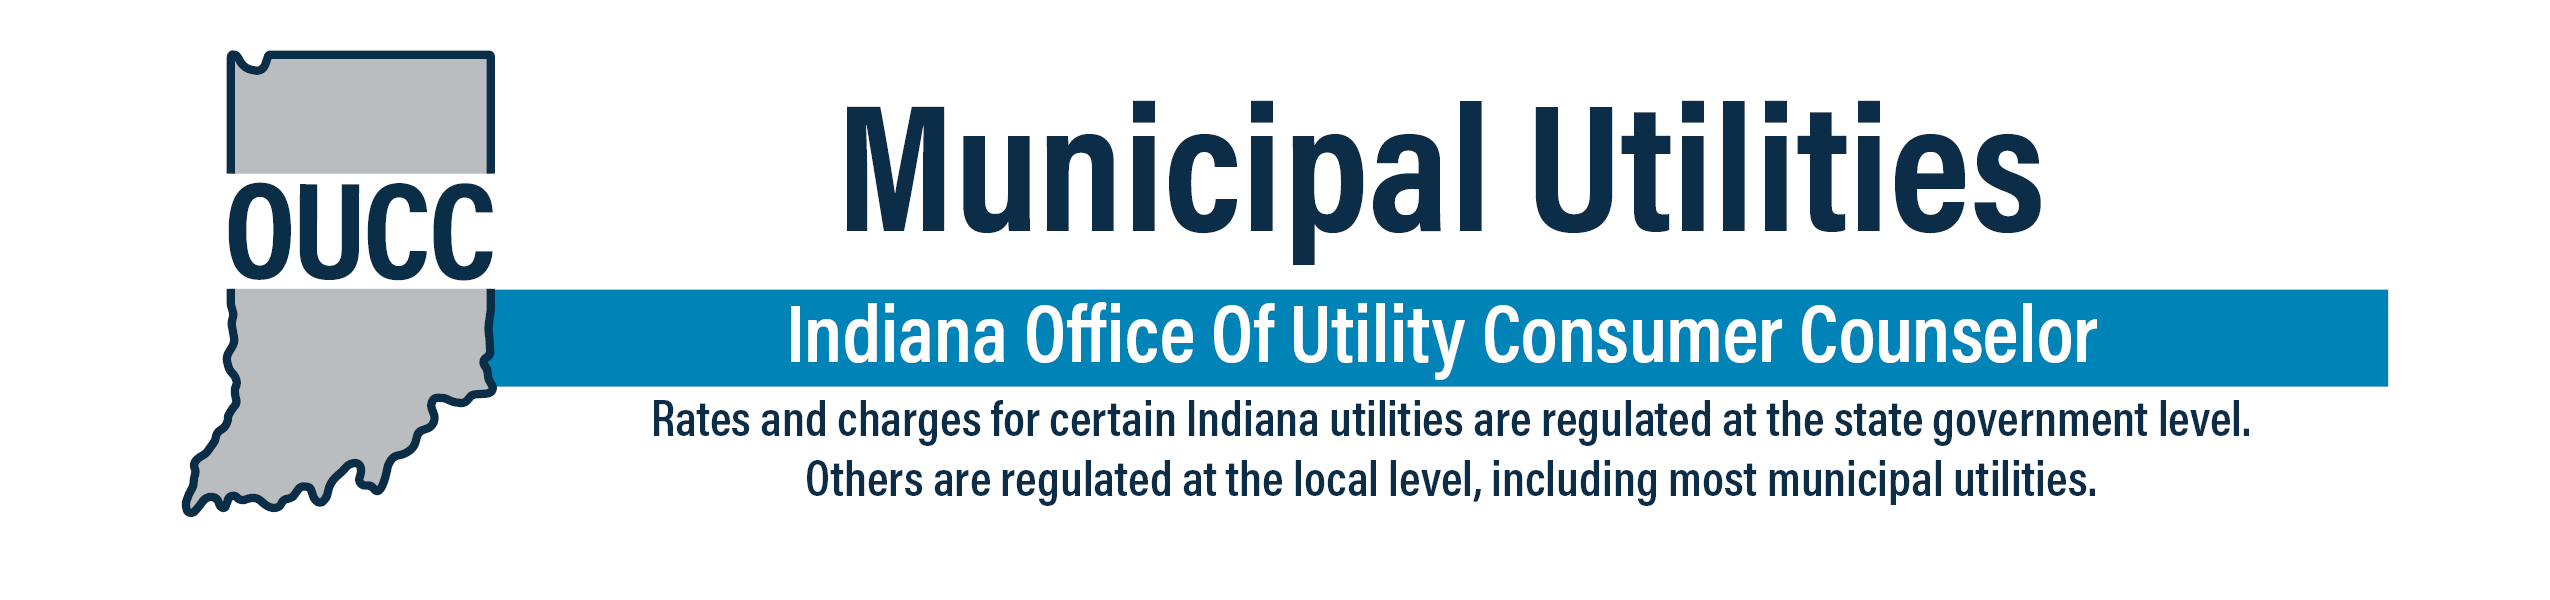 Municipal Utilities